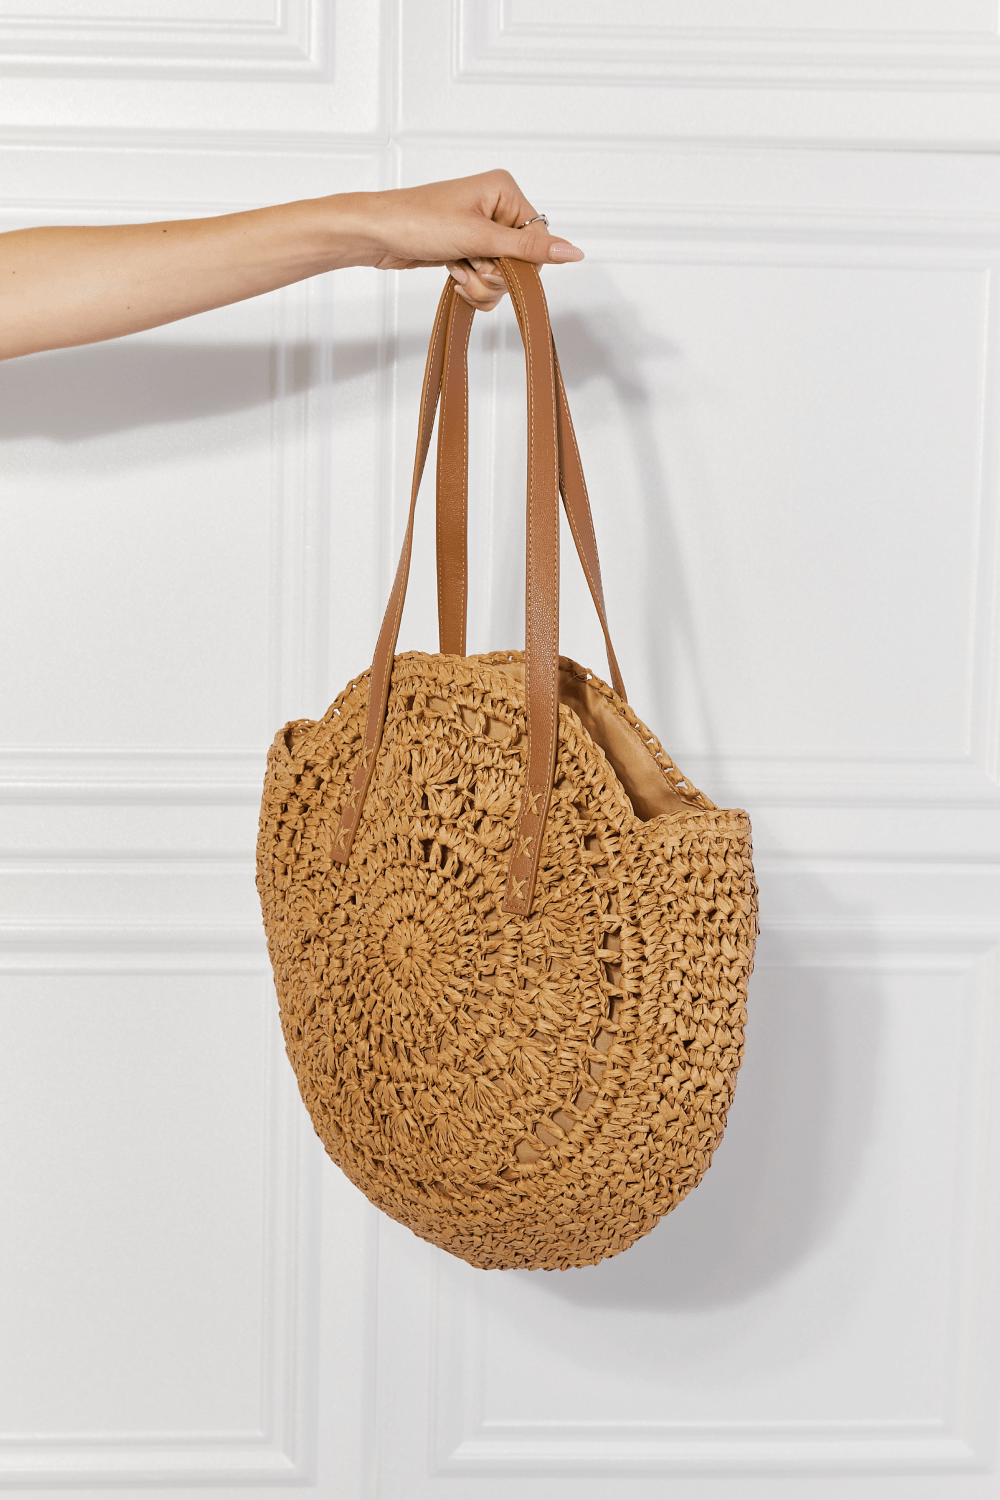 Sienna Justin Taylor C'est La Vie Crochet Handbag in Caramel Sentient Beauty Fashions Bag